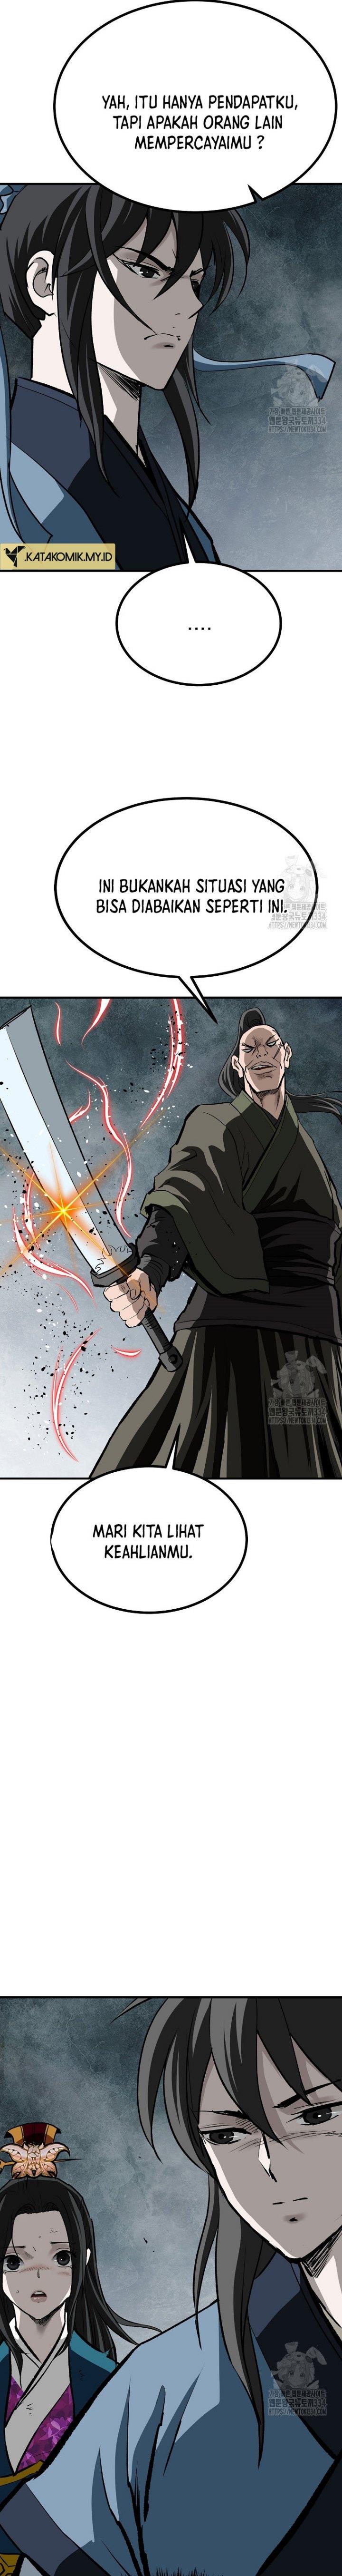 Archer Sword God: Descendants of the Archer Chapter 103